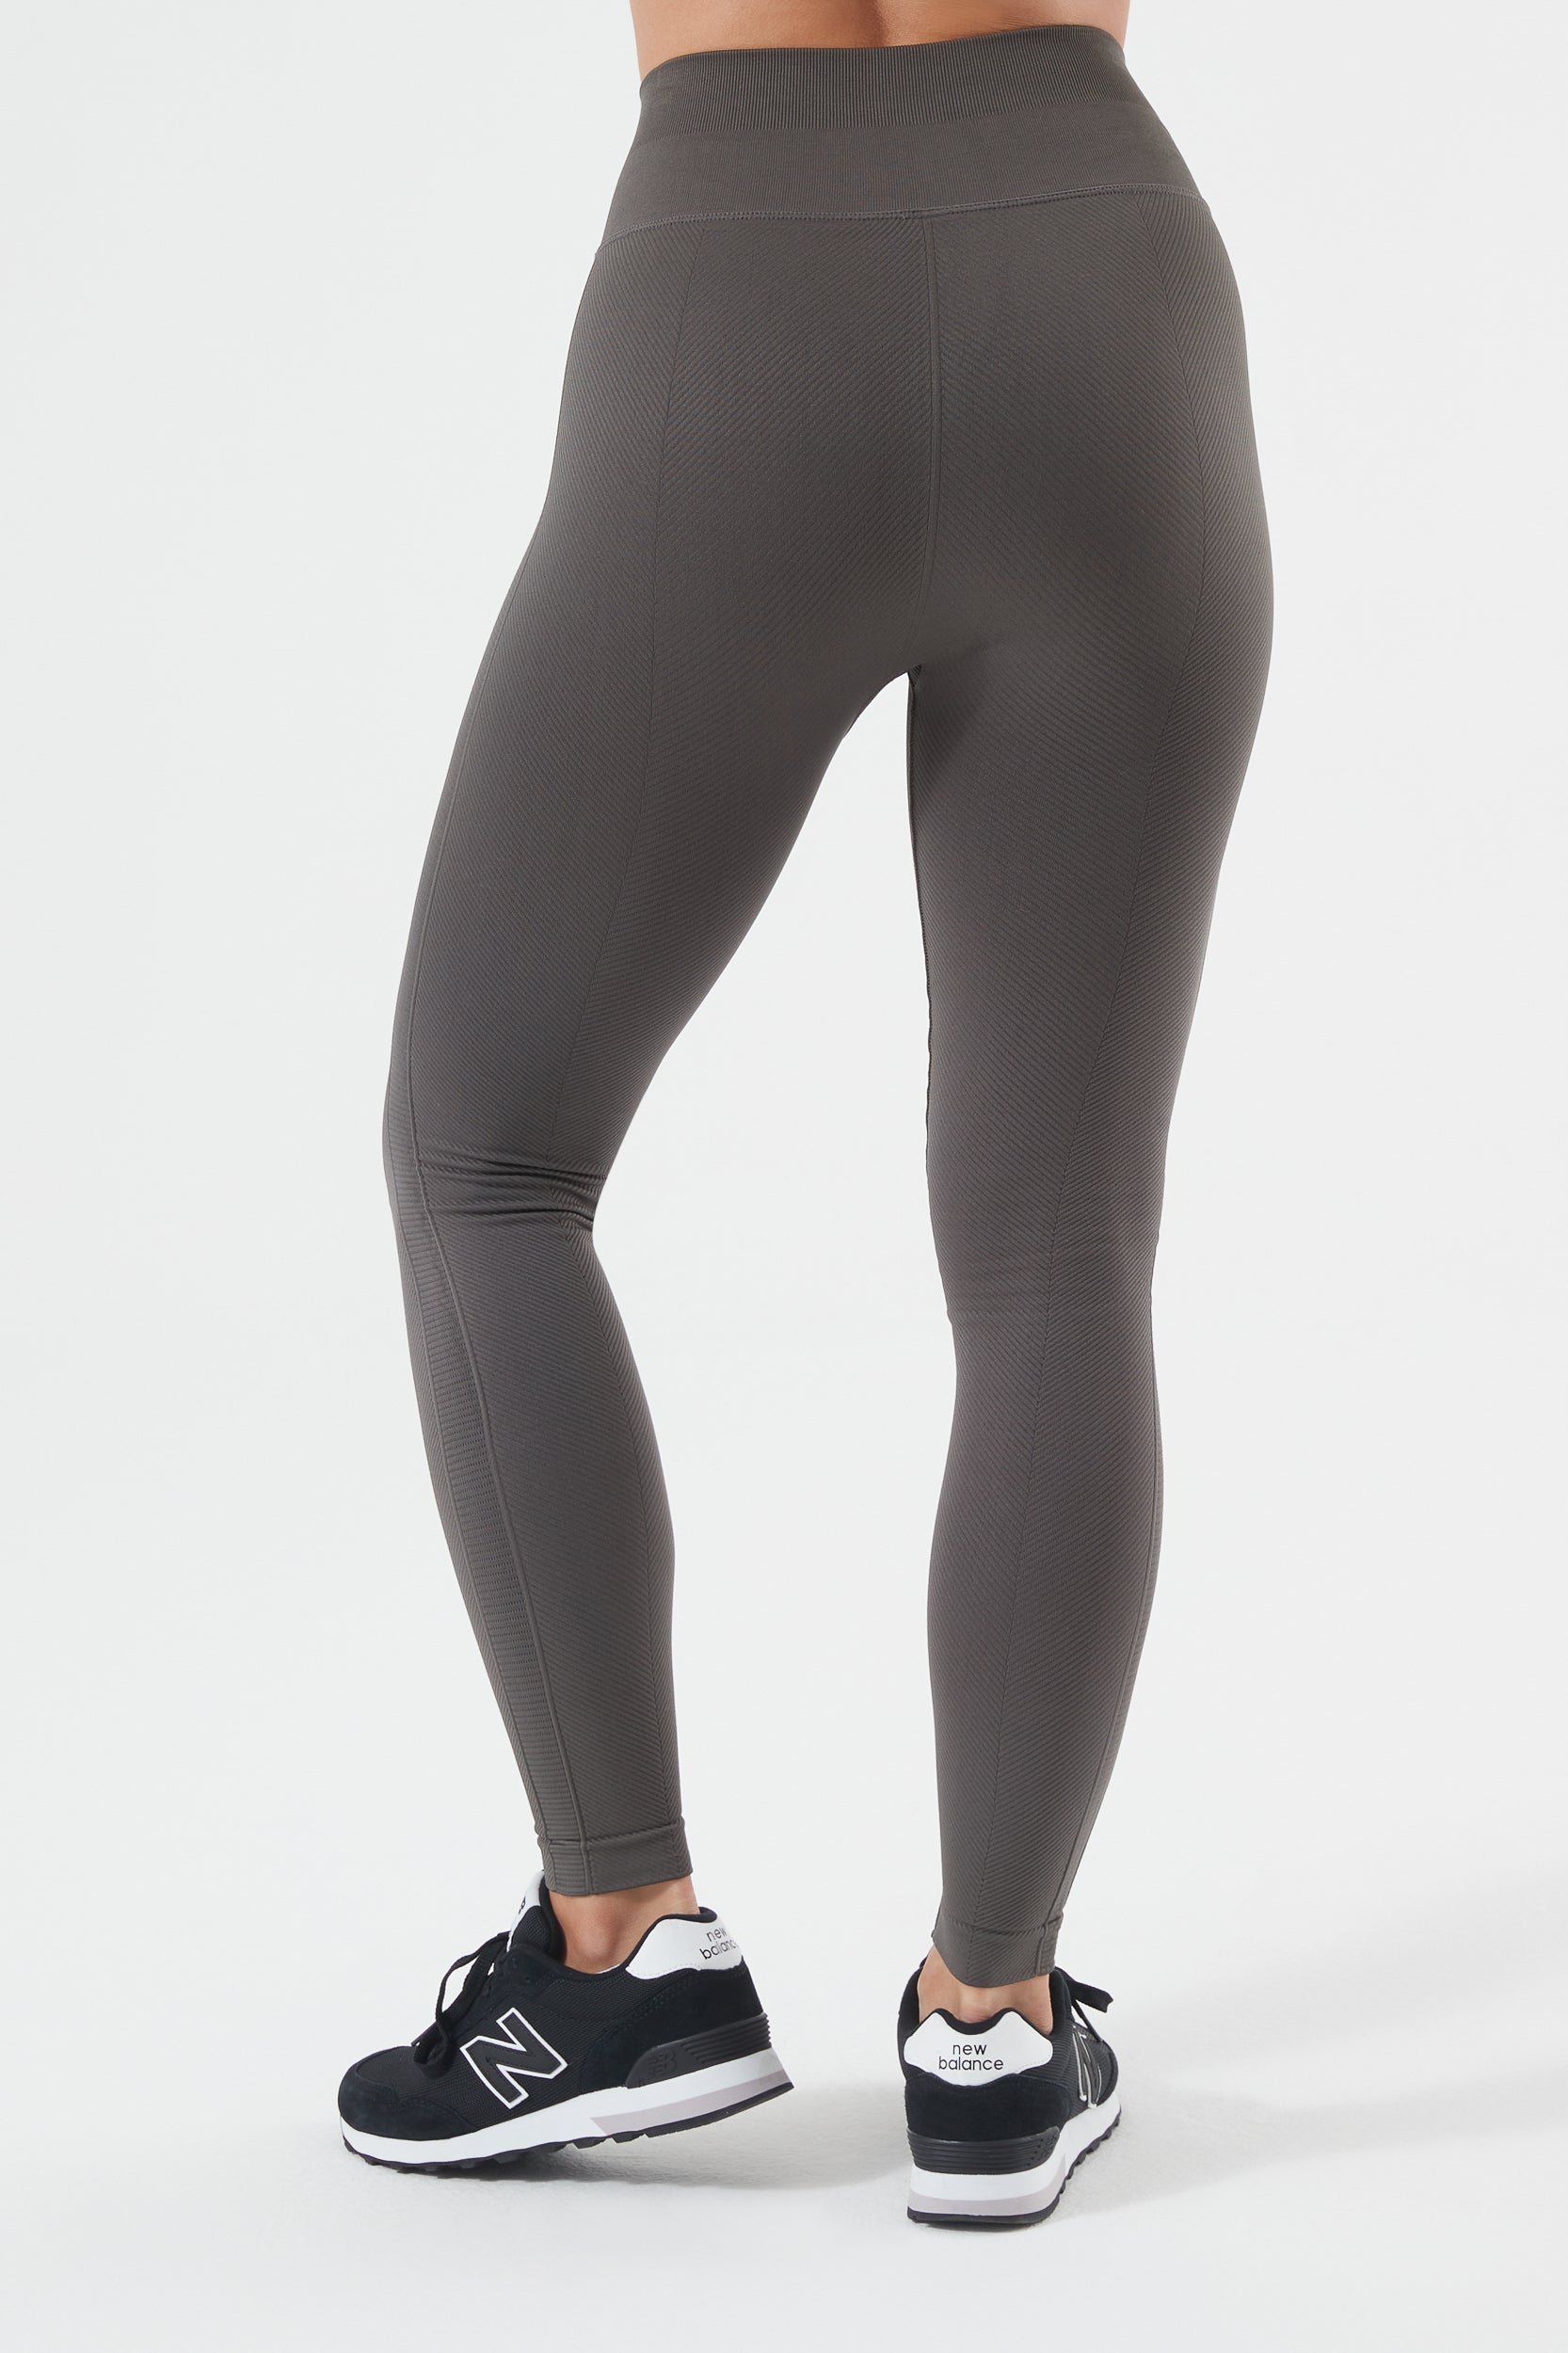 [Luxe Chic] Flamin Hot Yoga Leggings